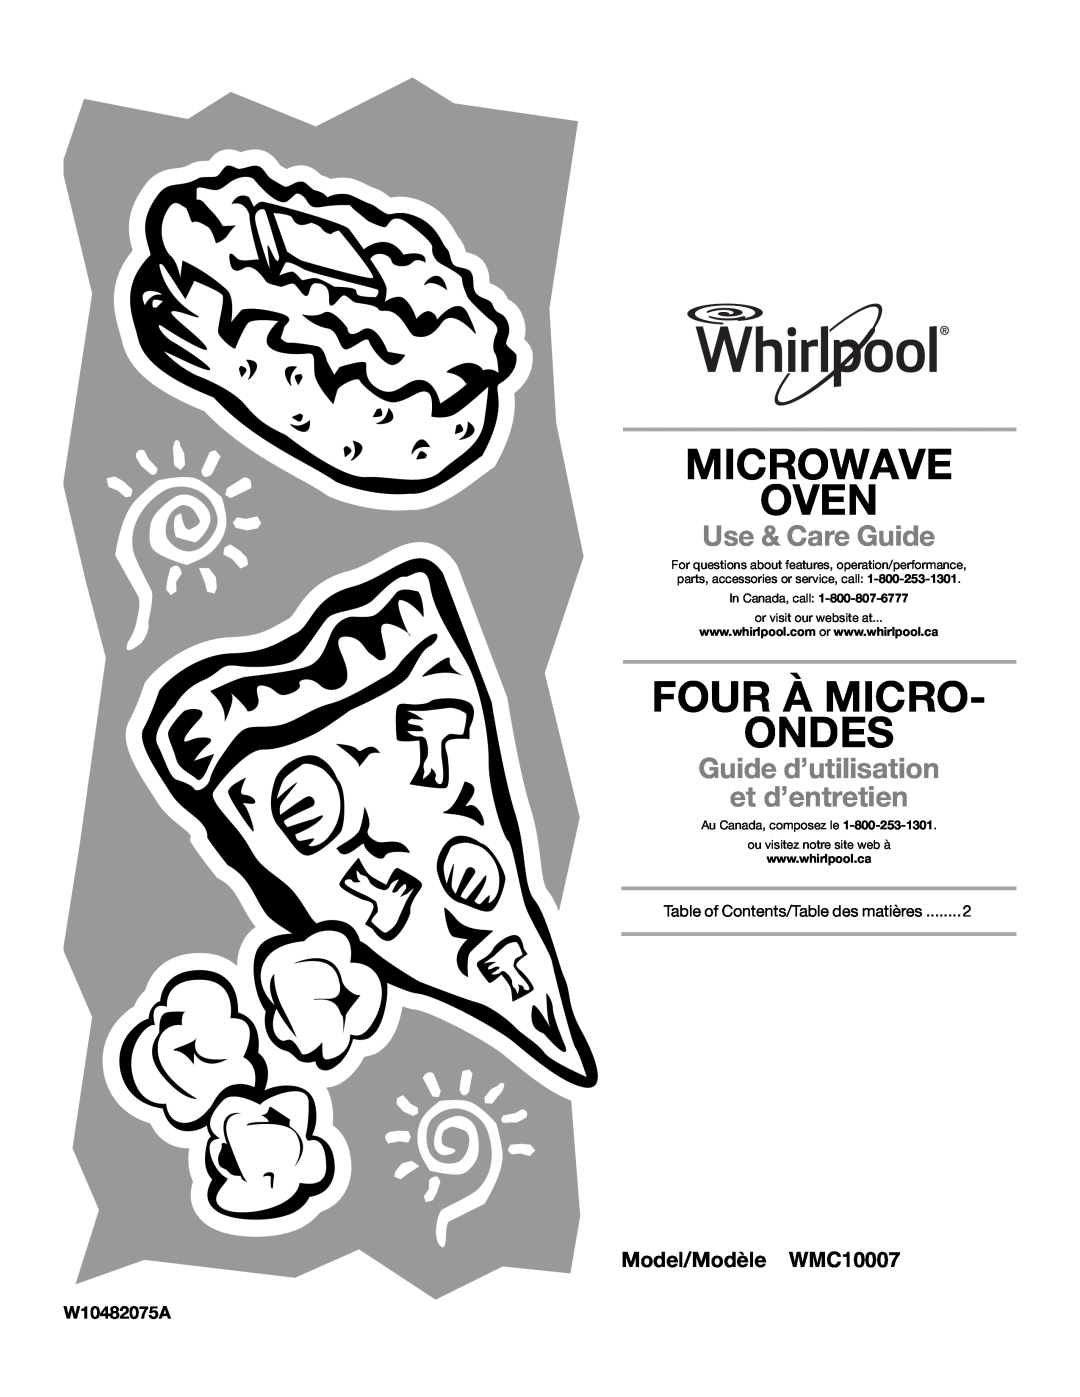 Whirlpool WMC10007 manual Microwave Oven, Four À Micro Ondes, Use & Care Guide, Guide d’utilisation et d’entretien 